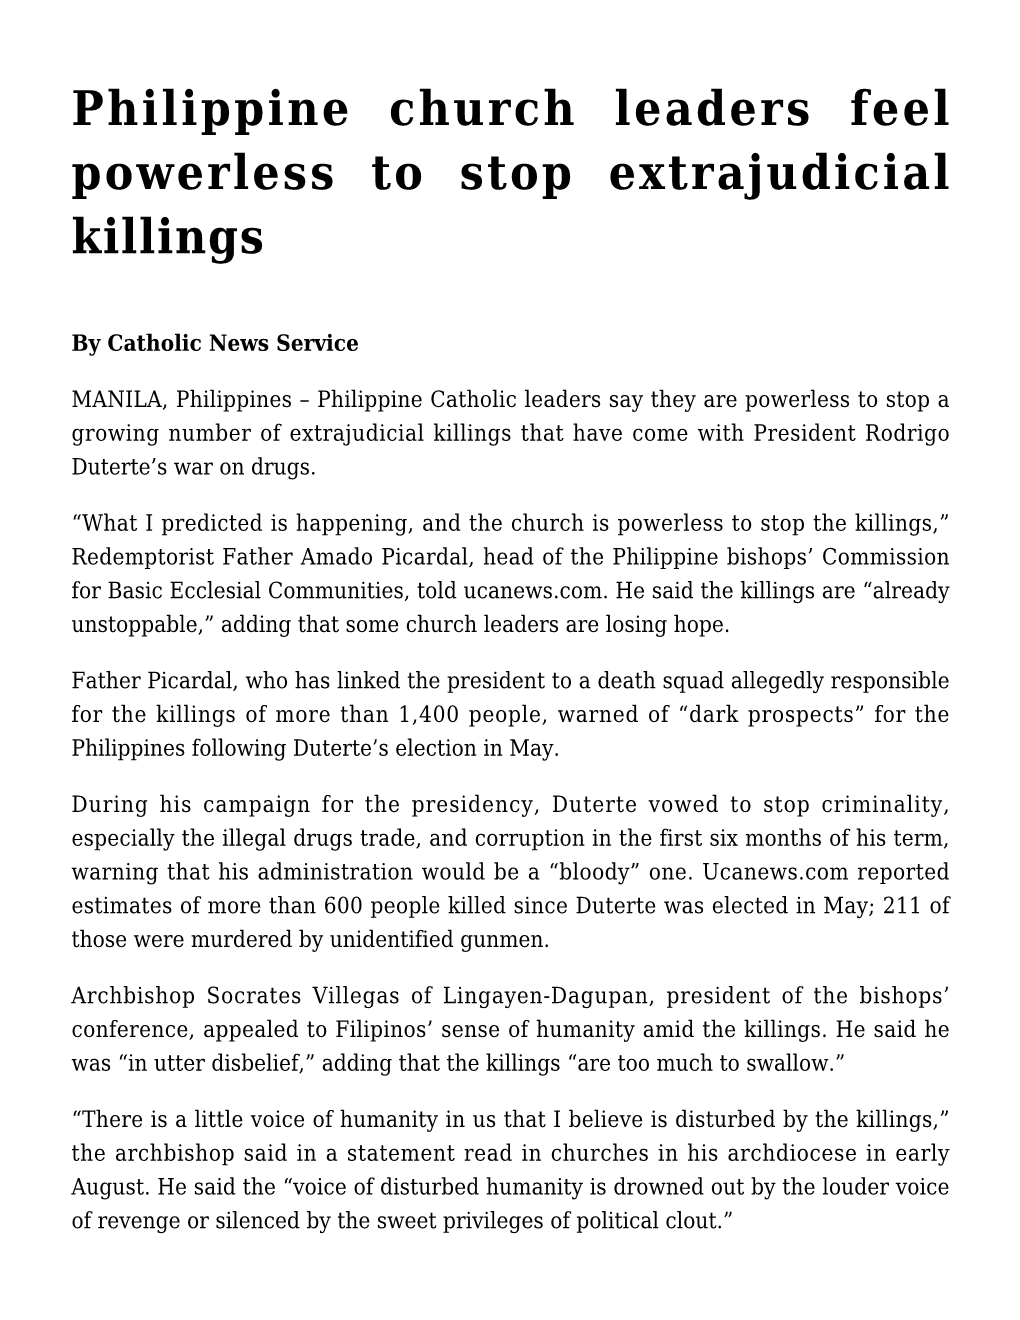 Philippine Church Leaders Feel Powerless to Stop Extrajudicial Killings